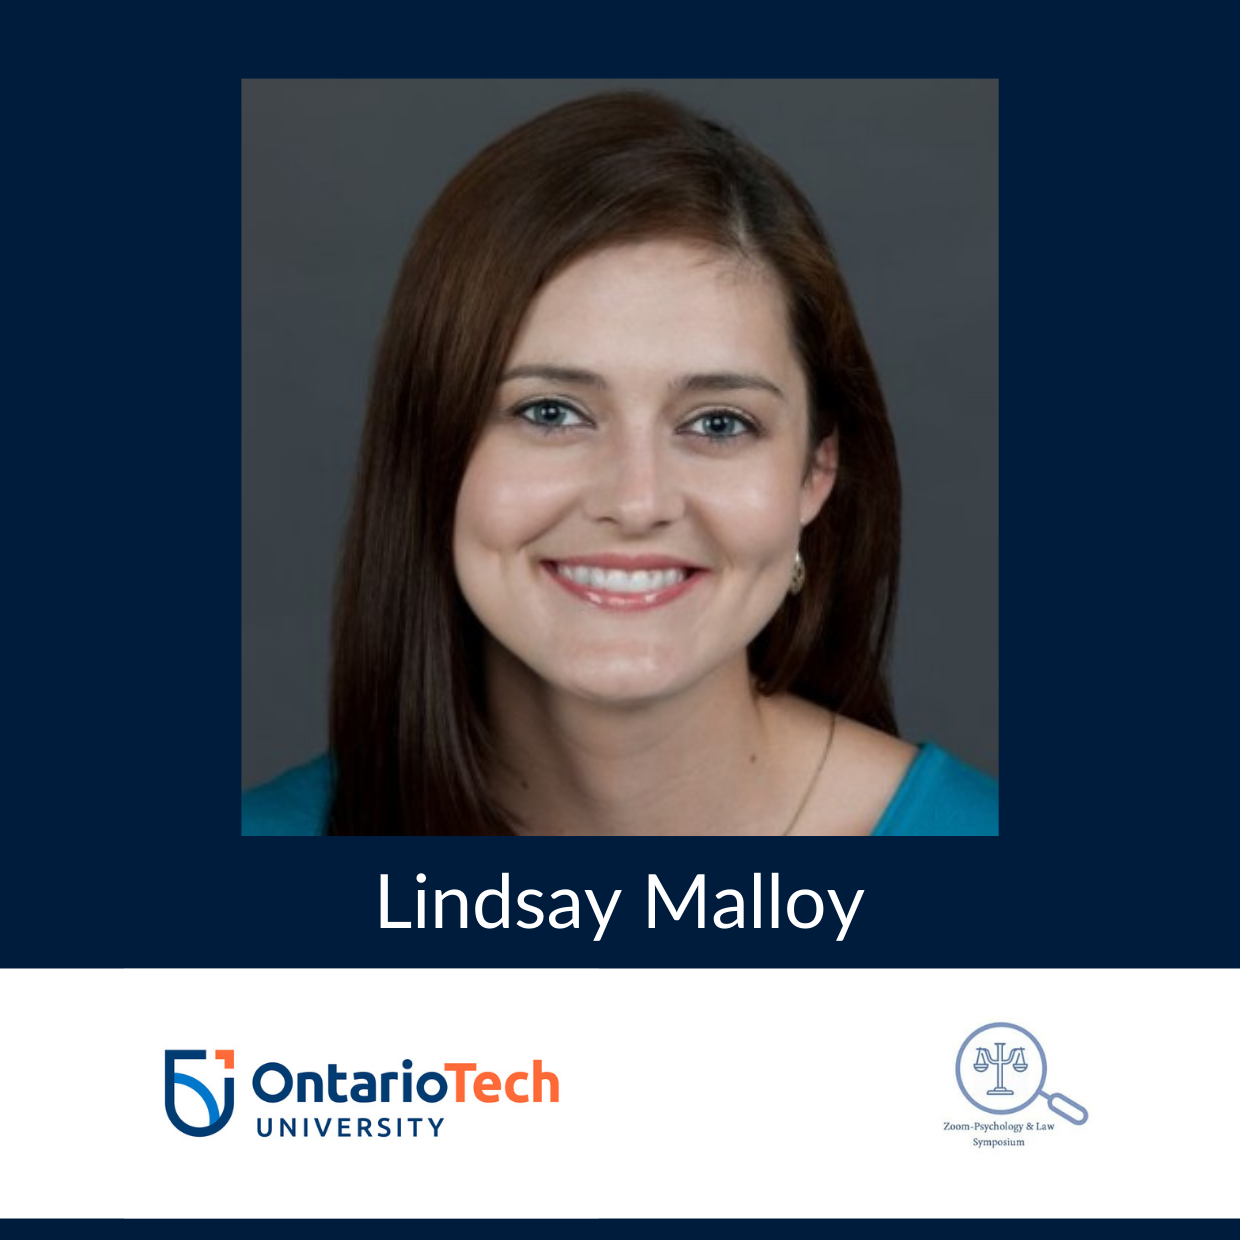 Lindsay Malloy